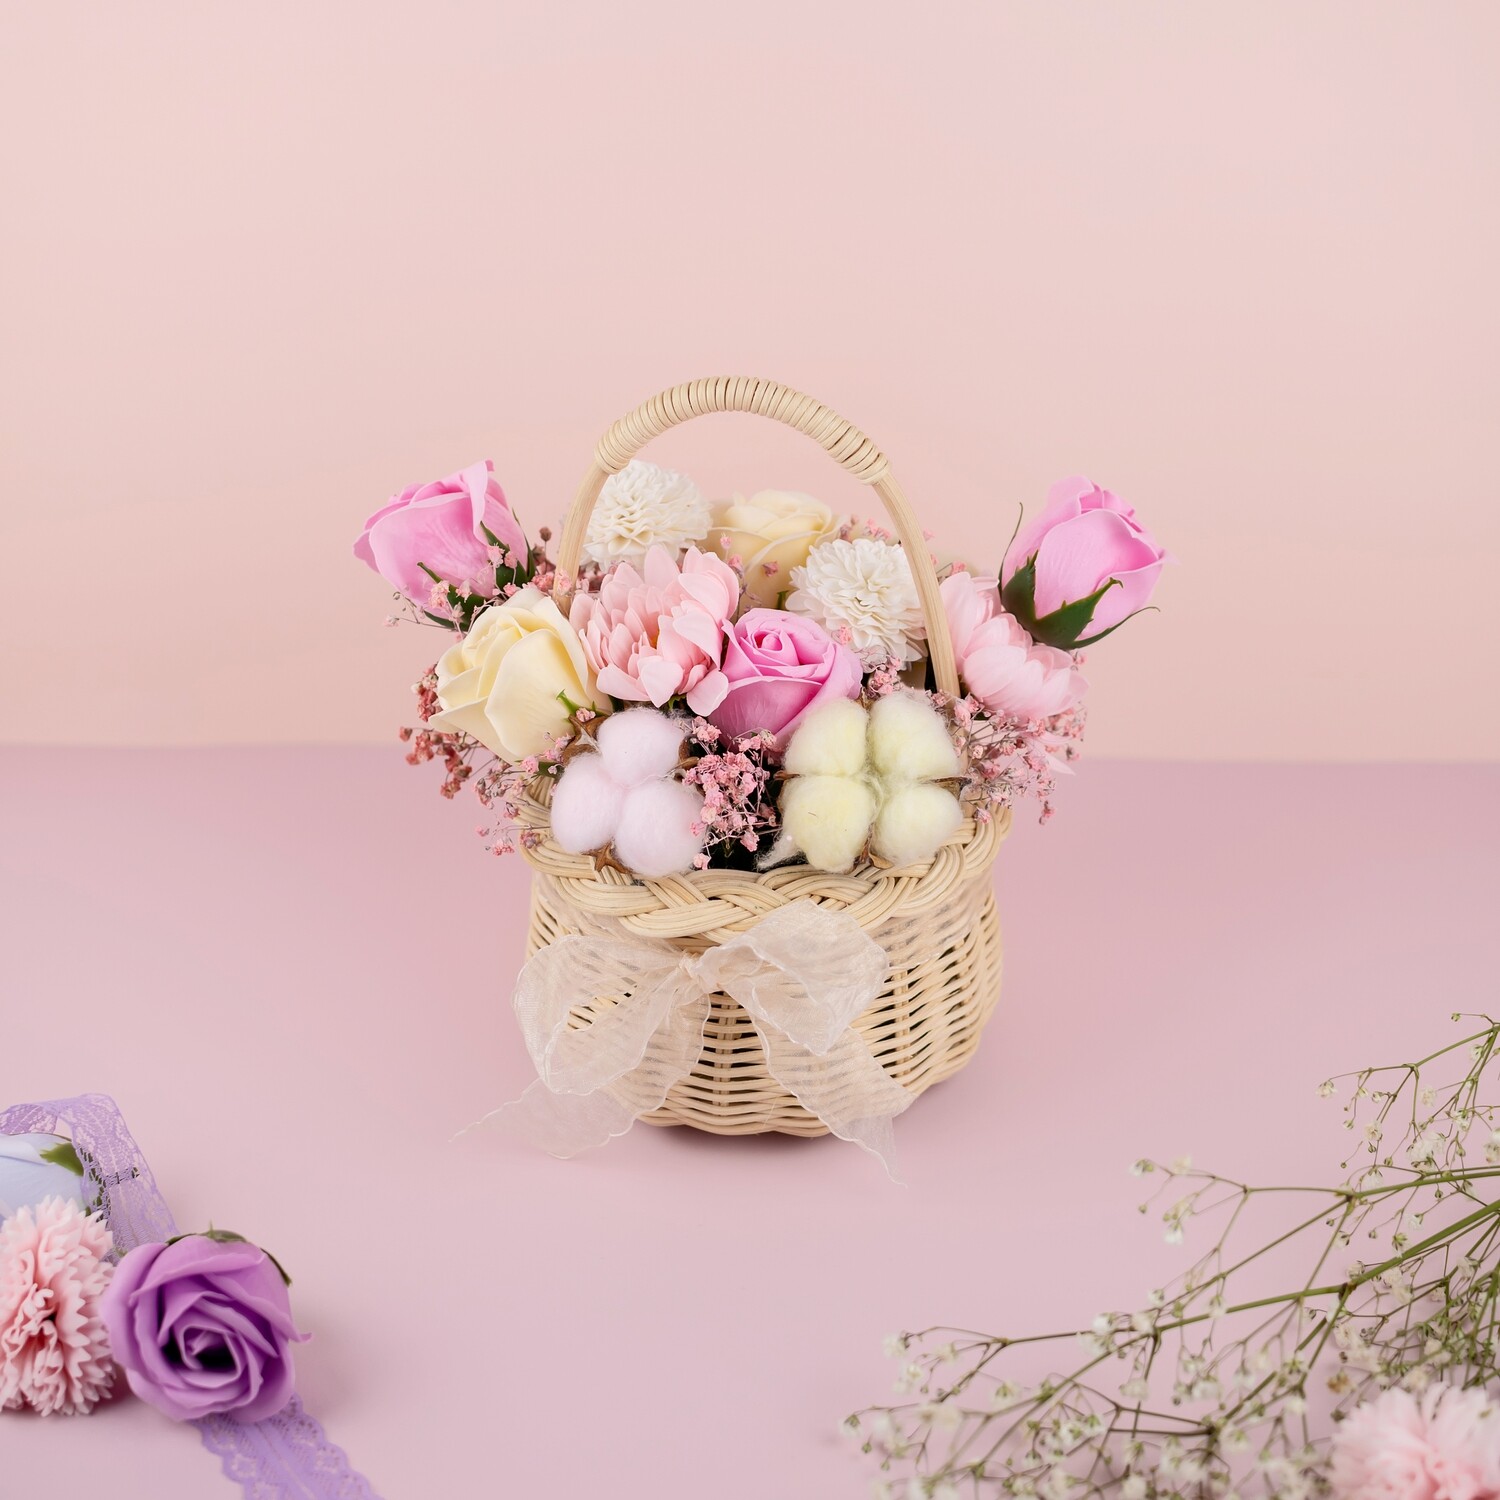 Kira Kira (Flower Basket) (By: Bull & Rabbit from Kuchai Lama)